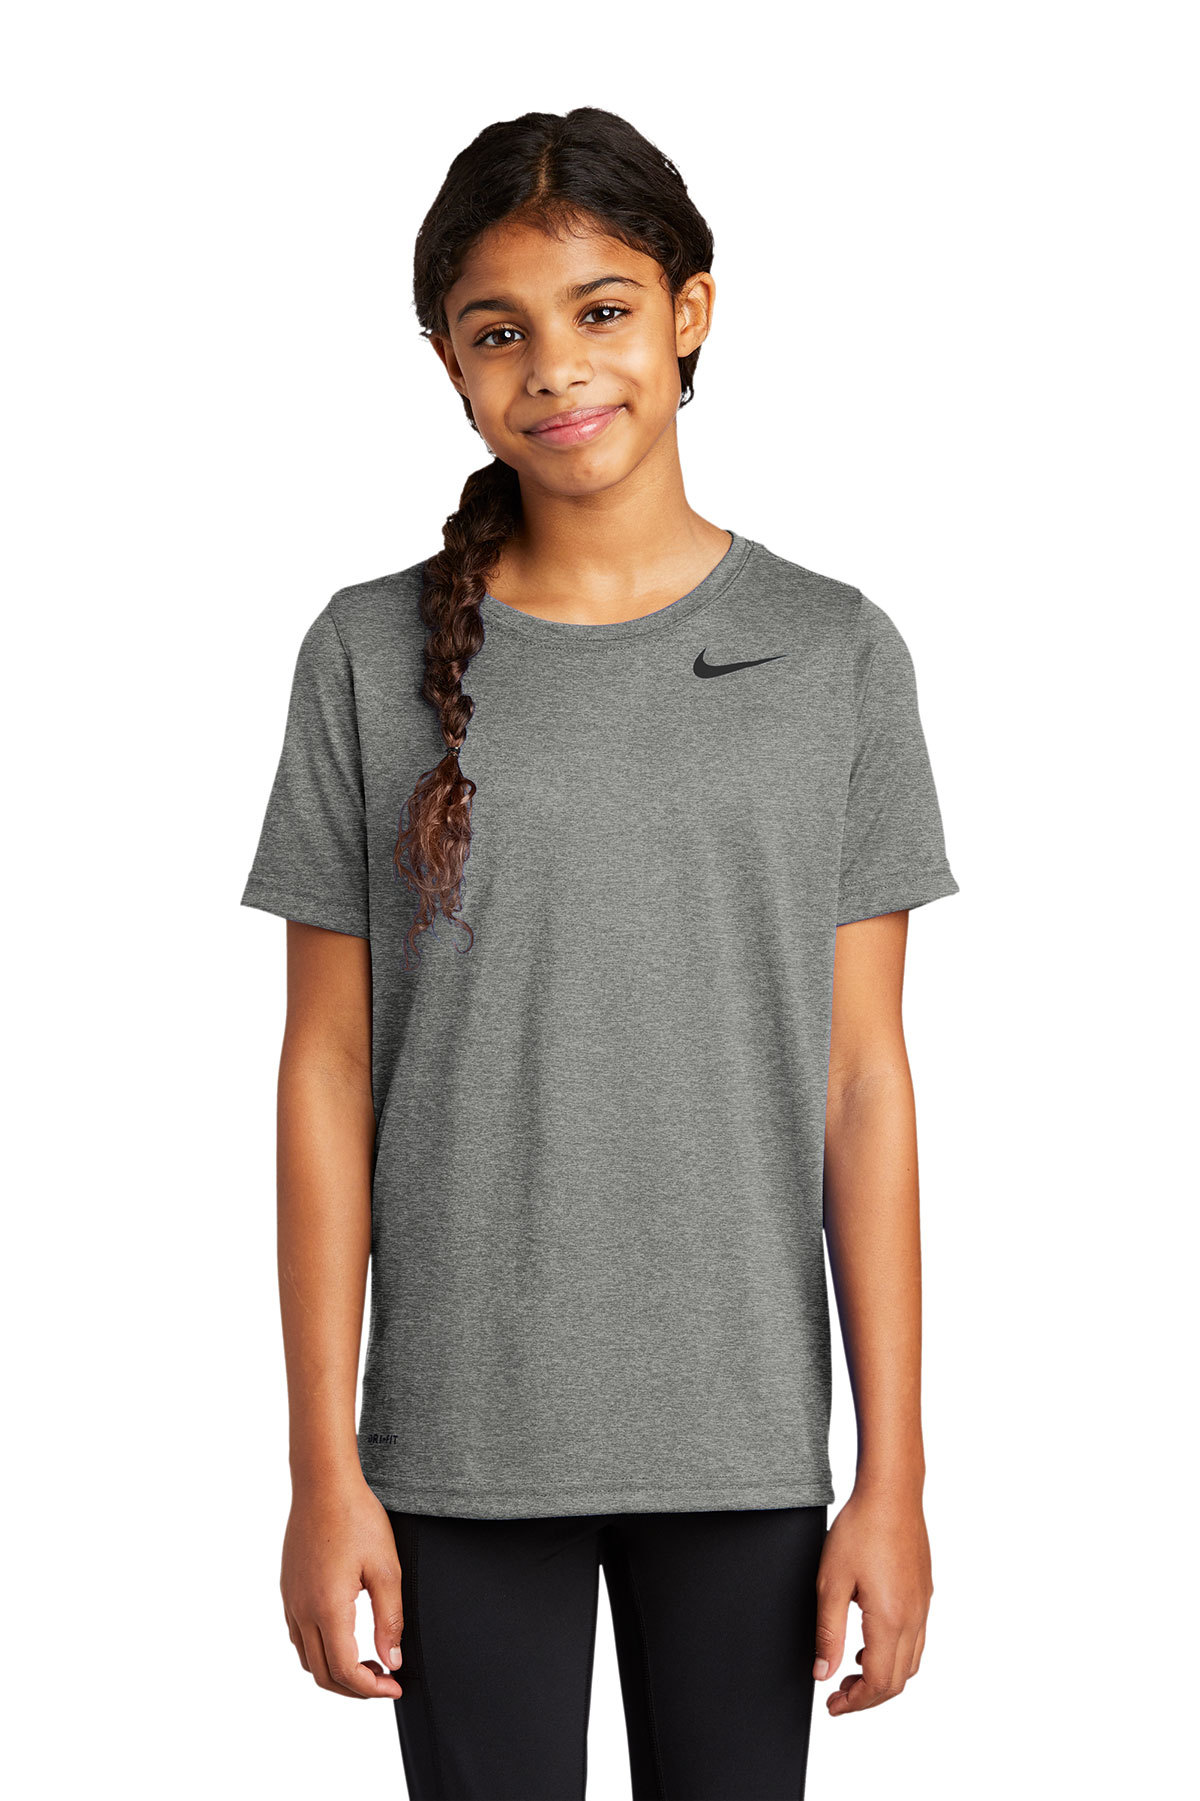 Nike Youth Legend Tee | Product | SanMar